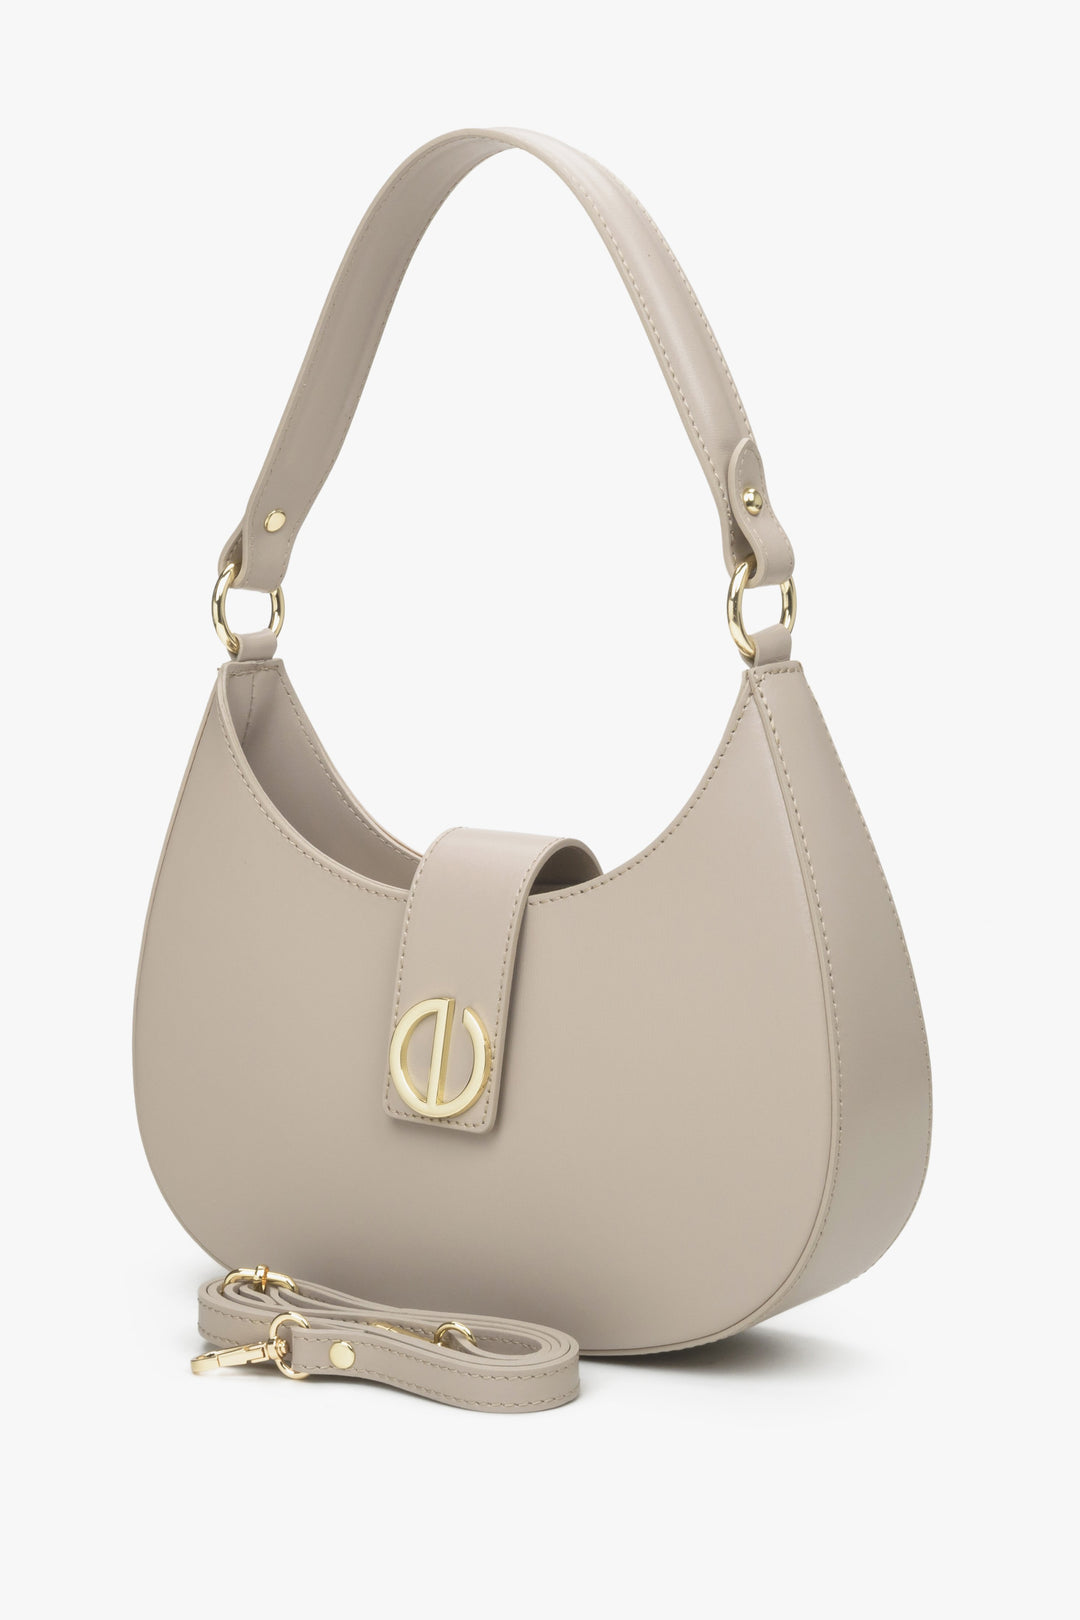 Estro women's beige baguette-style handbag made of Italian genuine leather.